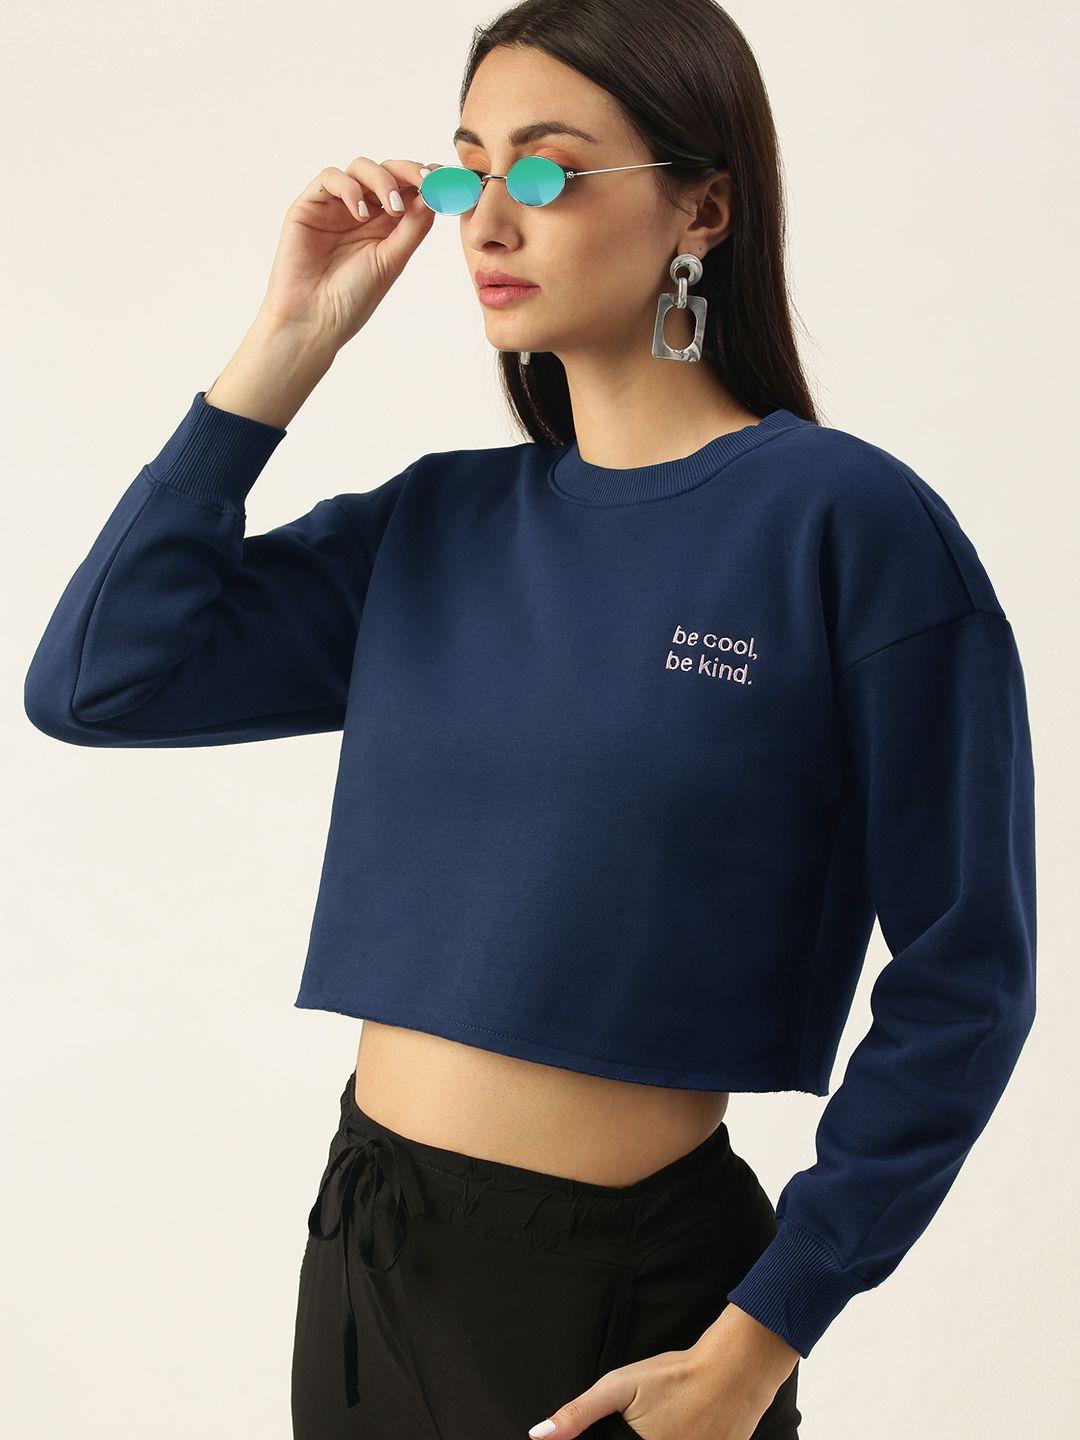 forever-21-women-navy-blue-&-white-embroidered-sweatshirt